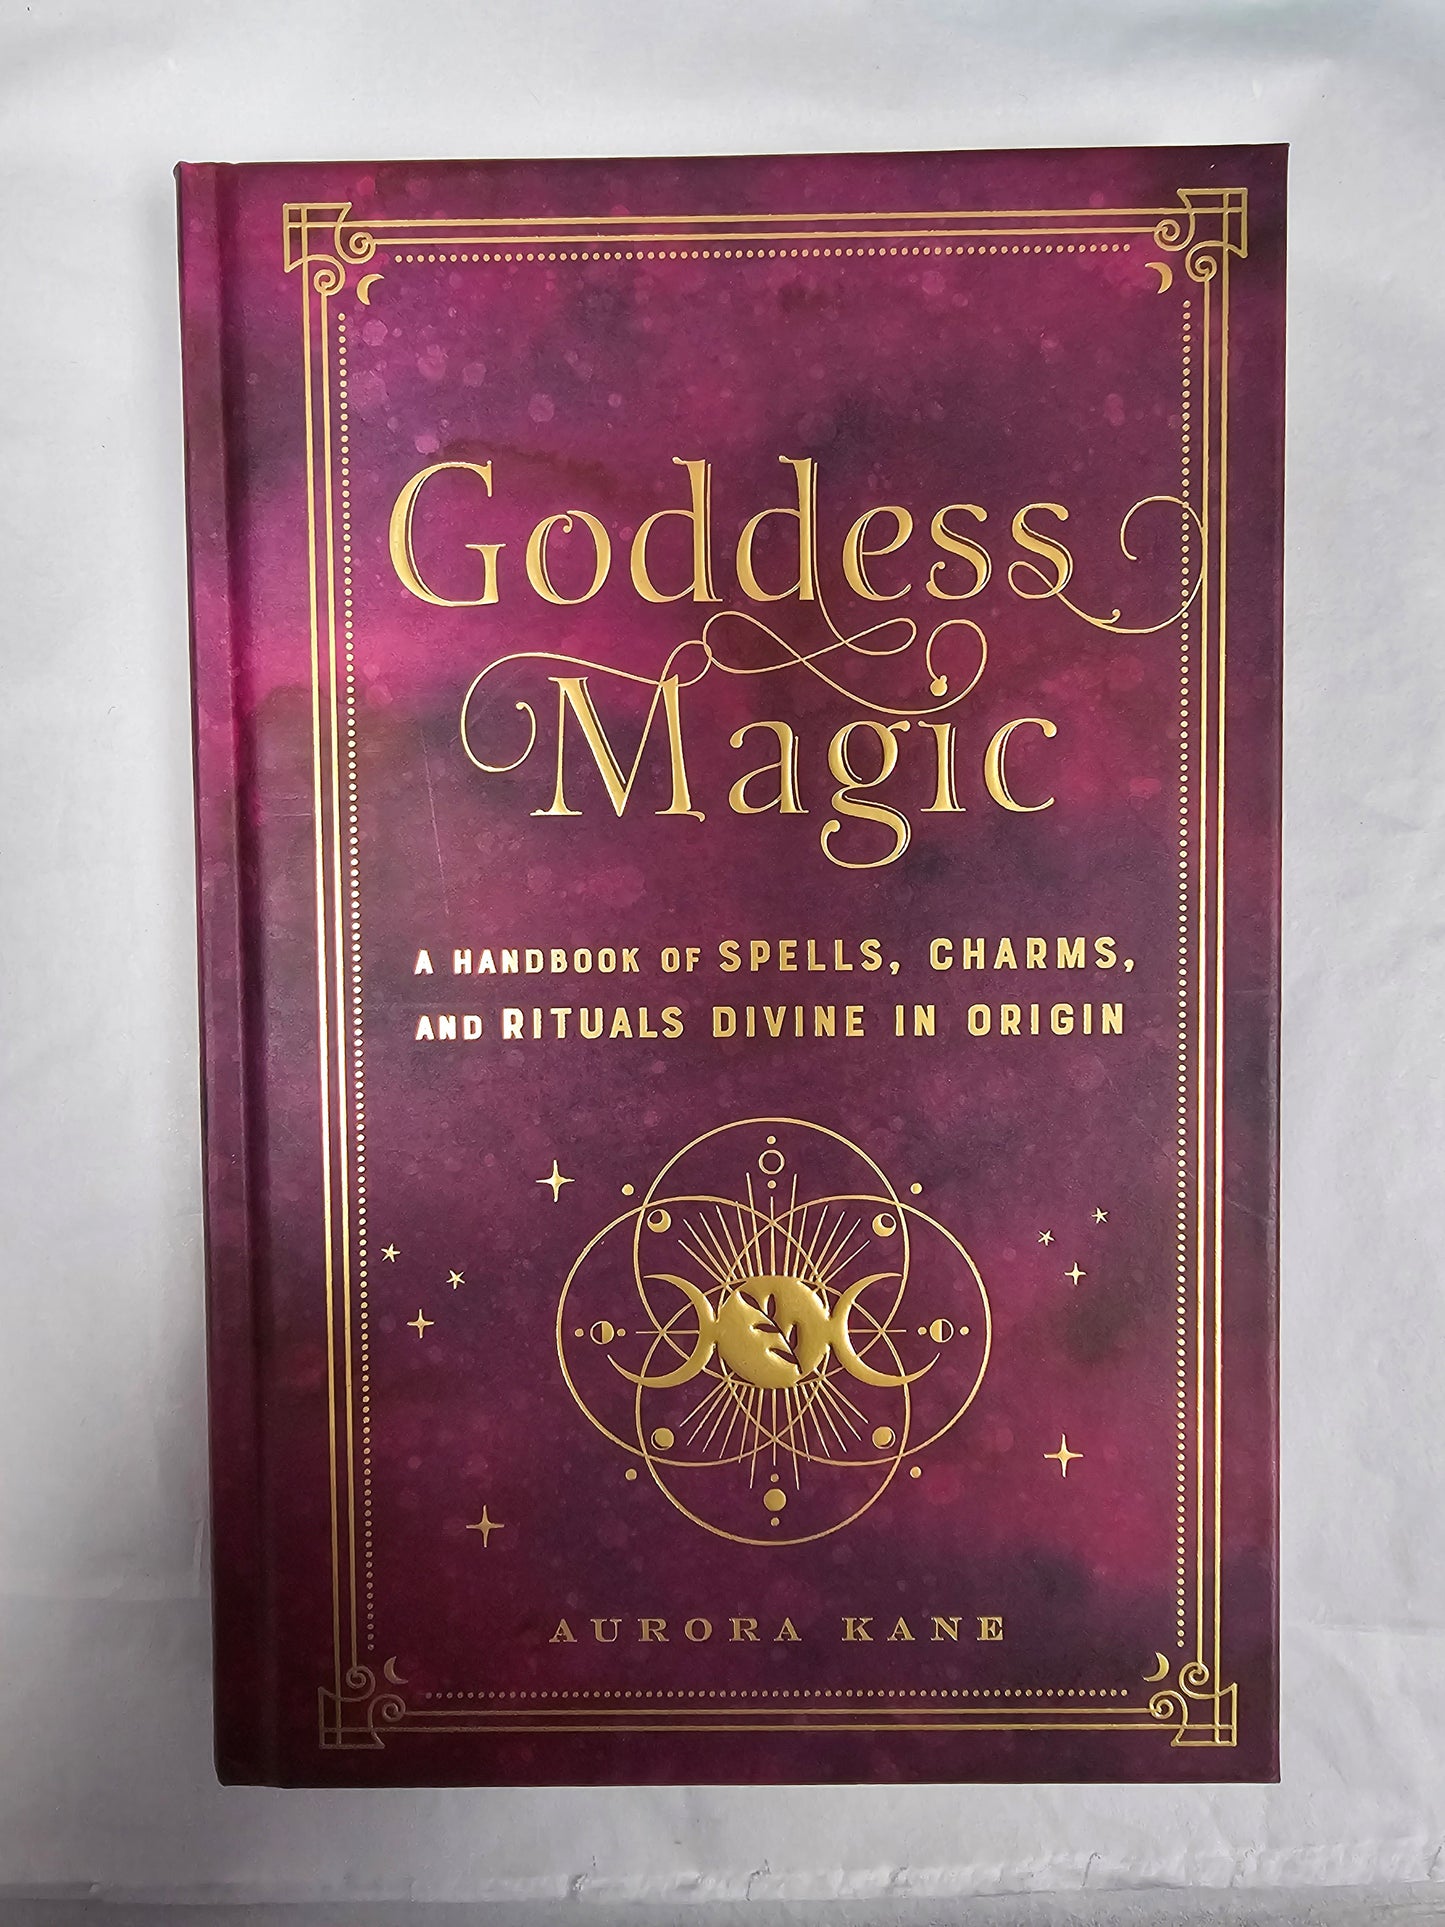 Goddess Magic book